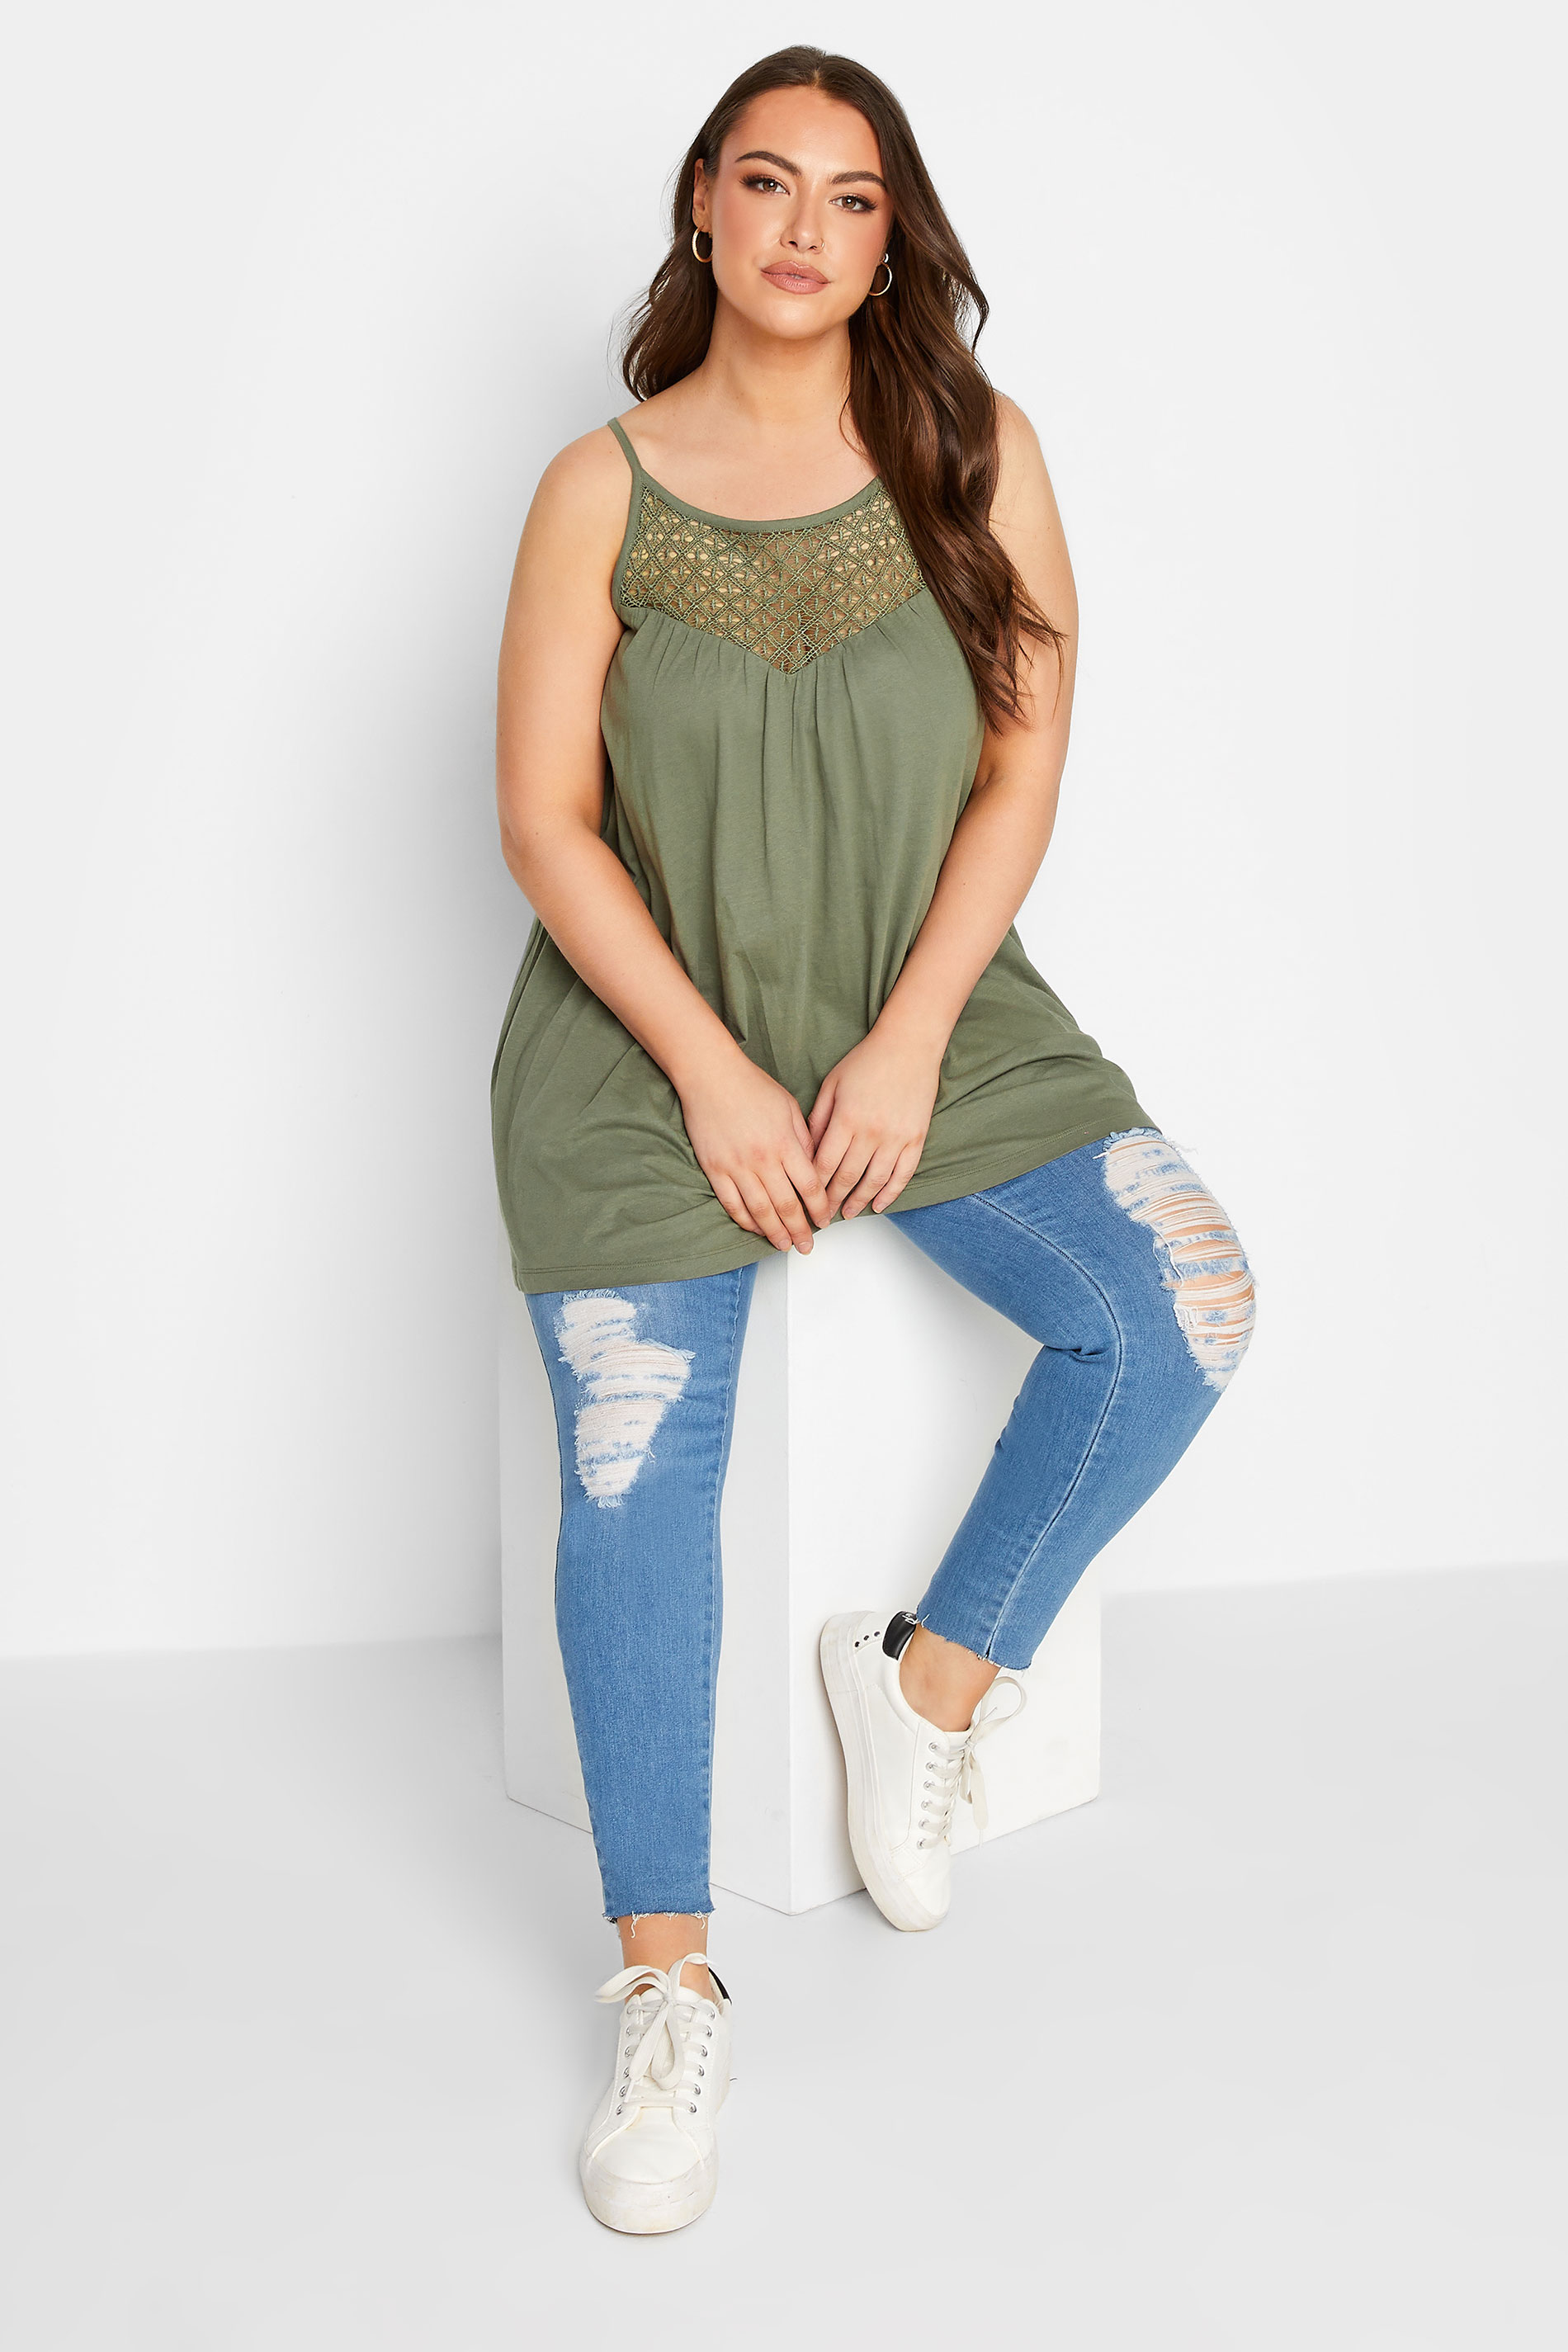 YOURS Plus Size Khaki Green Crochet Vest Top | Yours Clothing  2